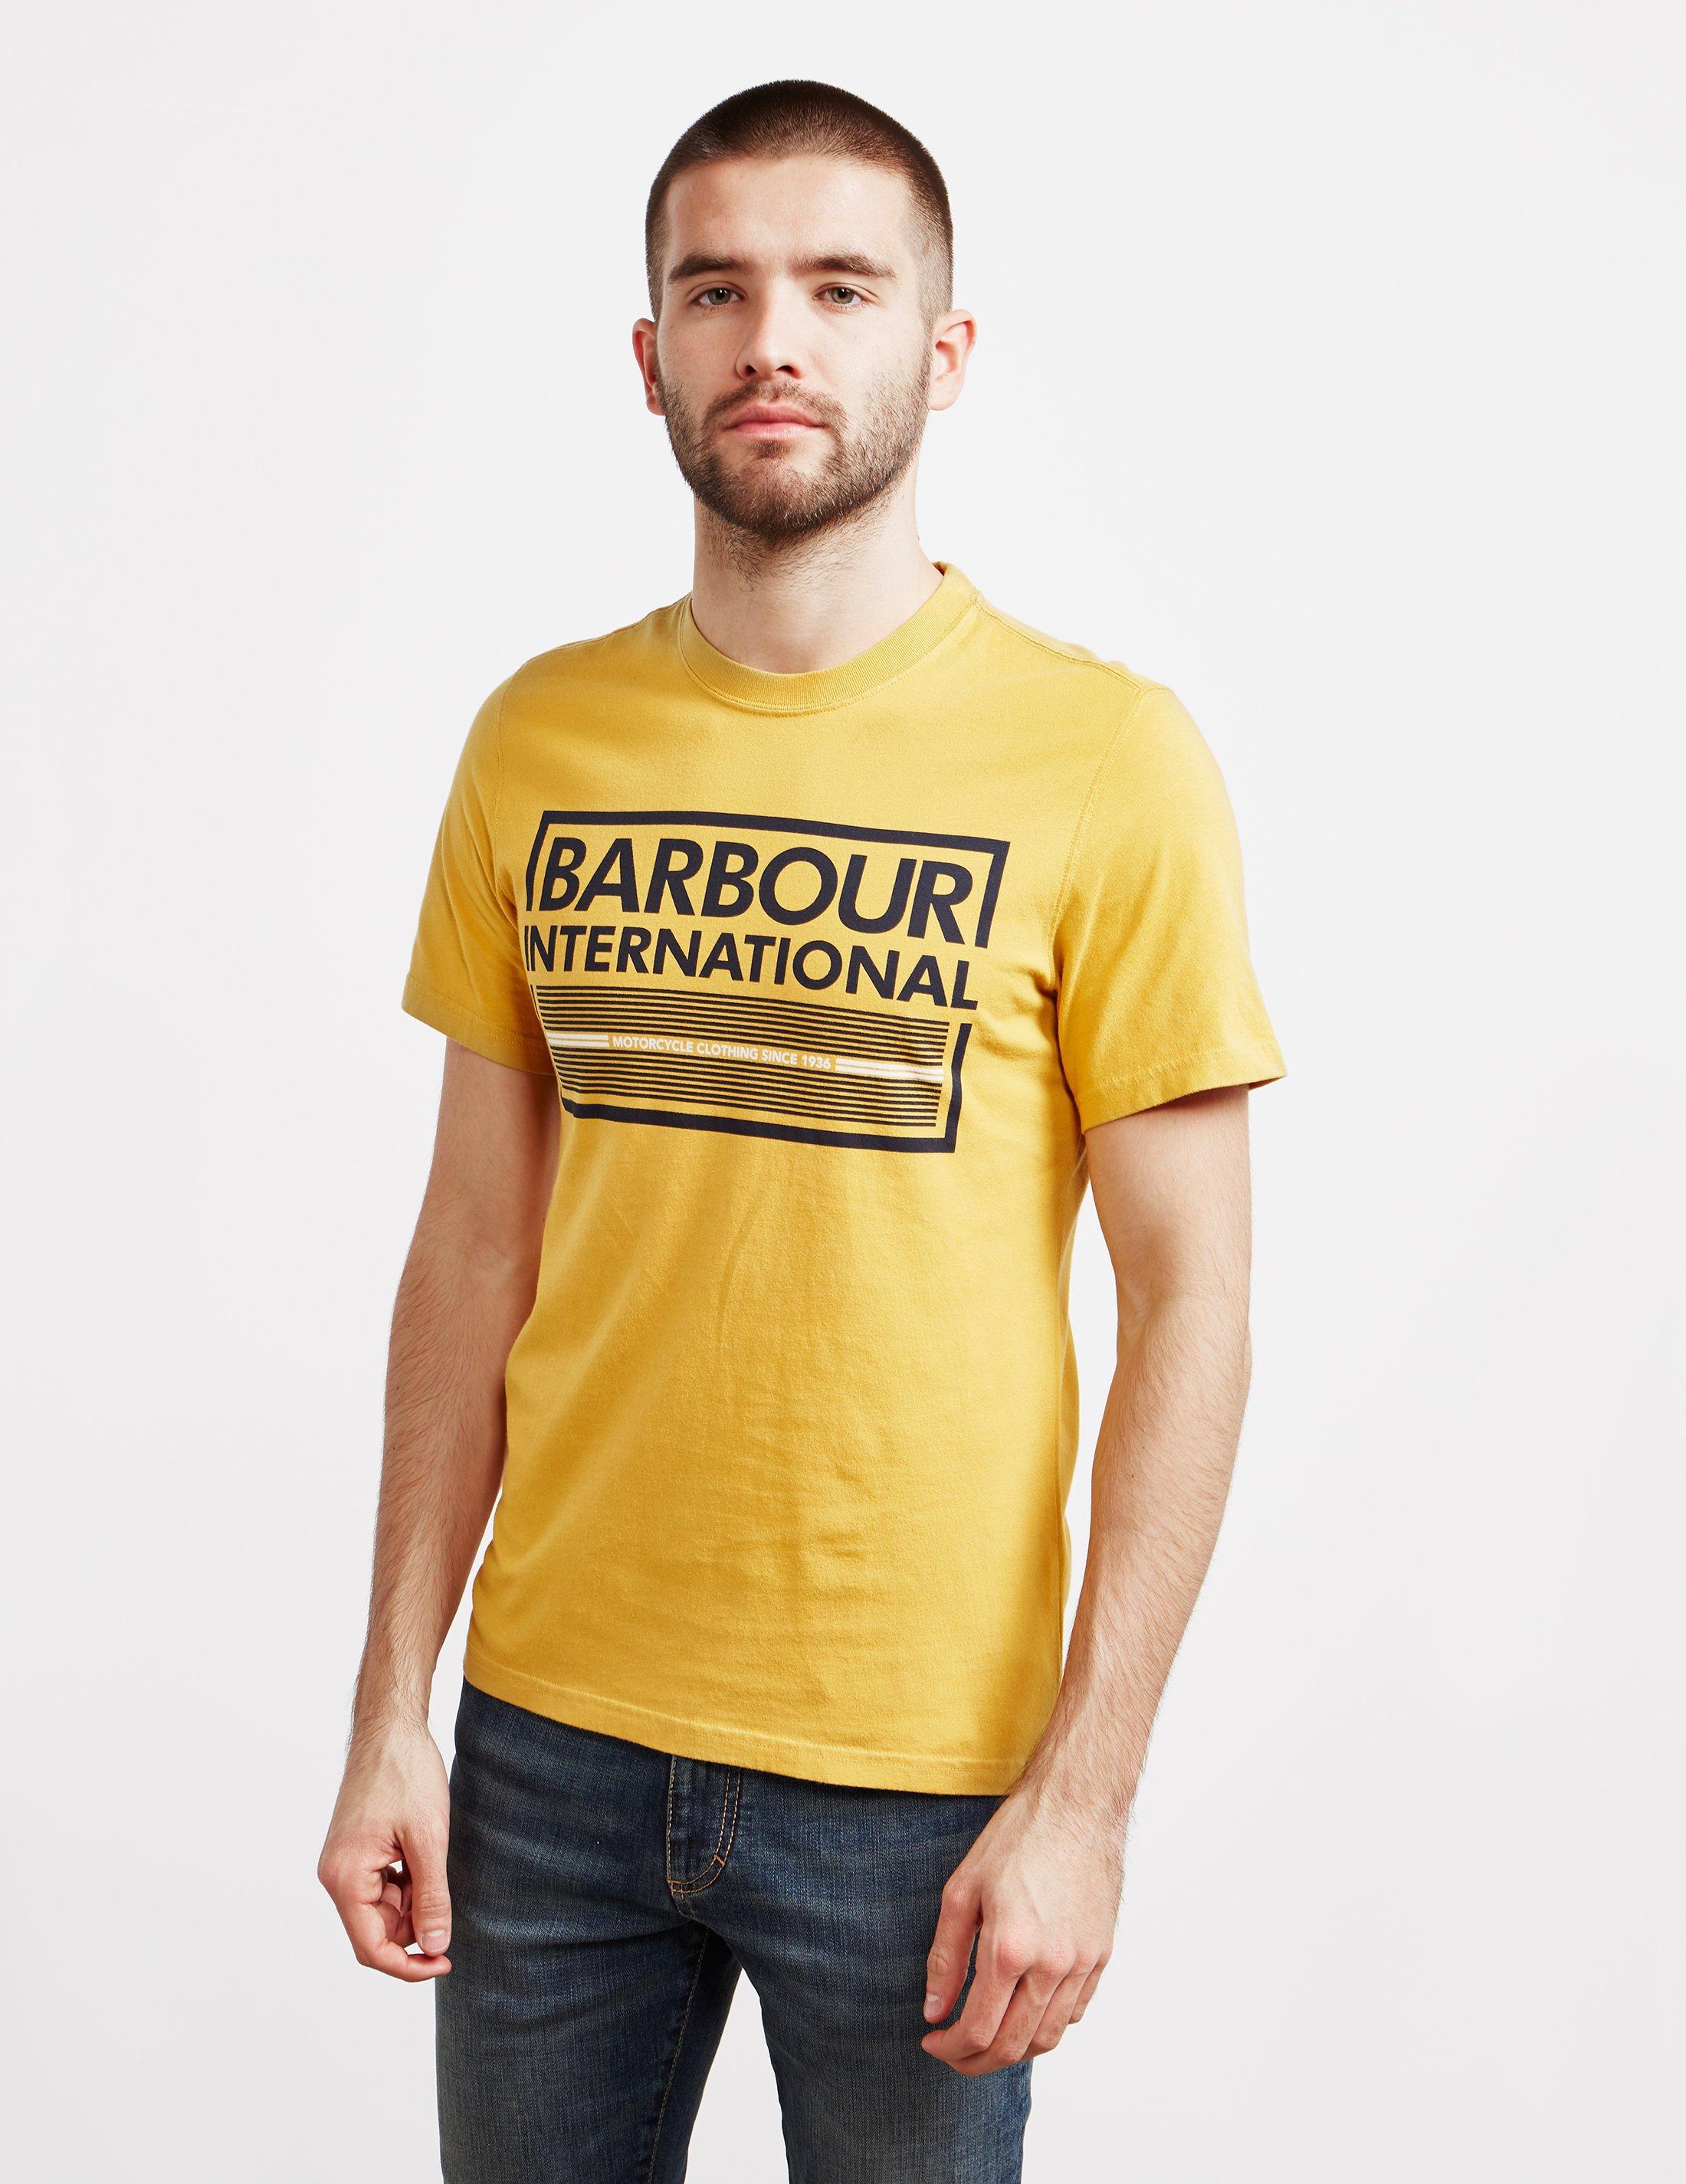 مرة اخري شفرة ناطحة سحاب barbour yellow t shirt - claudiastories.com